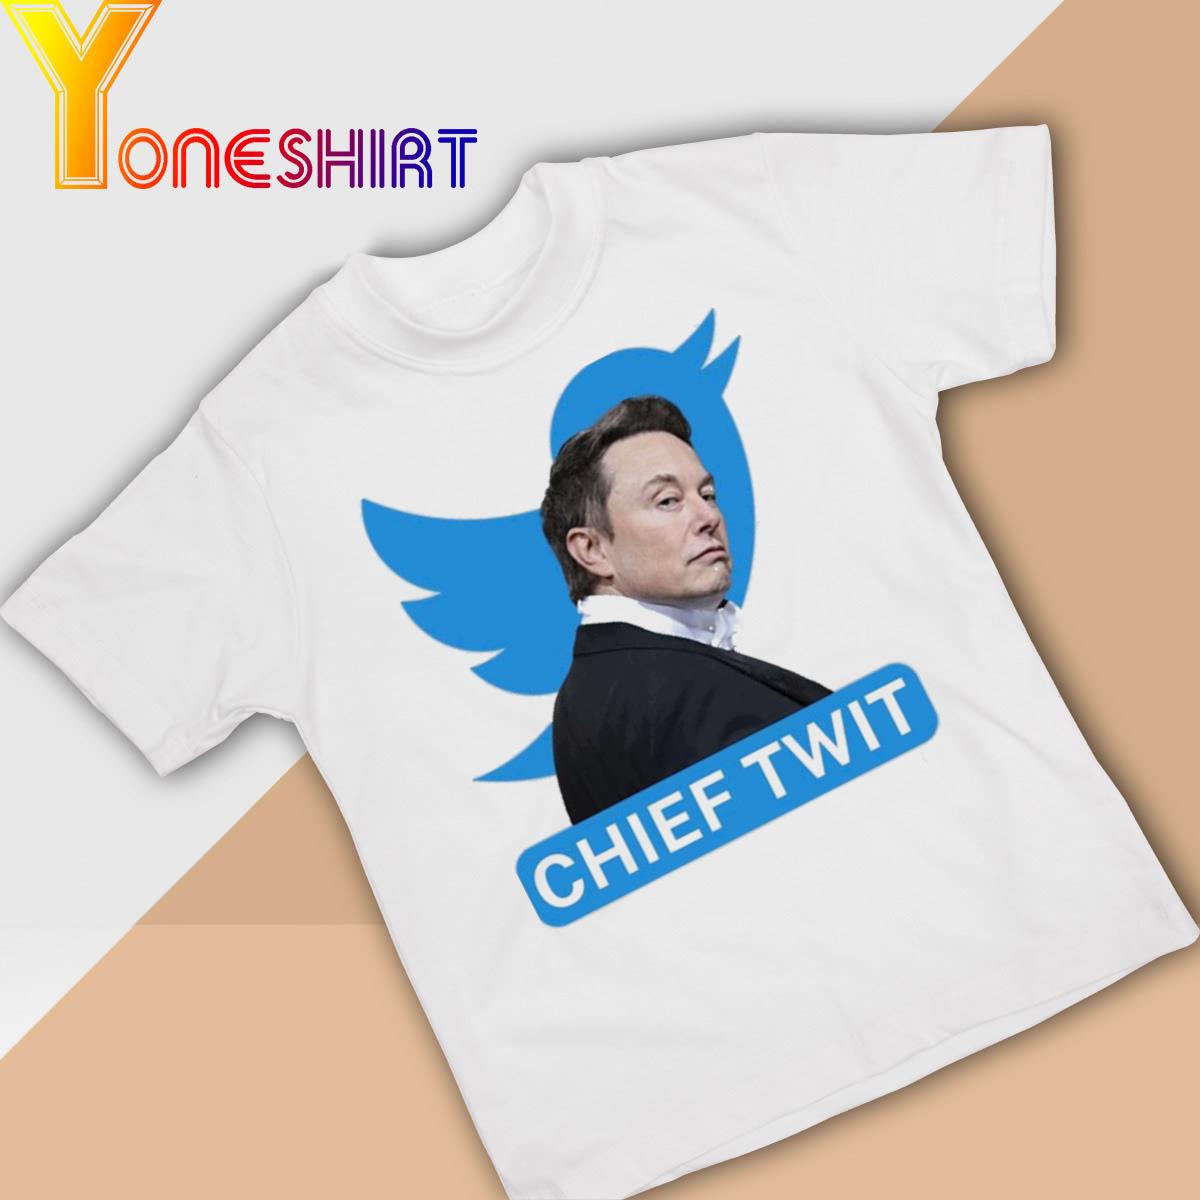 Portrait Of Elon Musk Chief Twit Twitter shirt